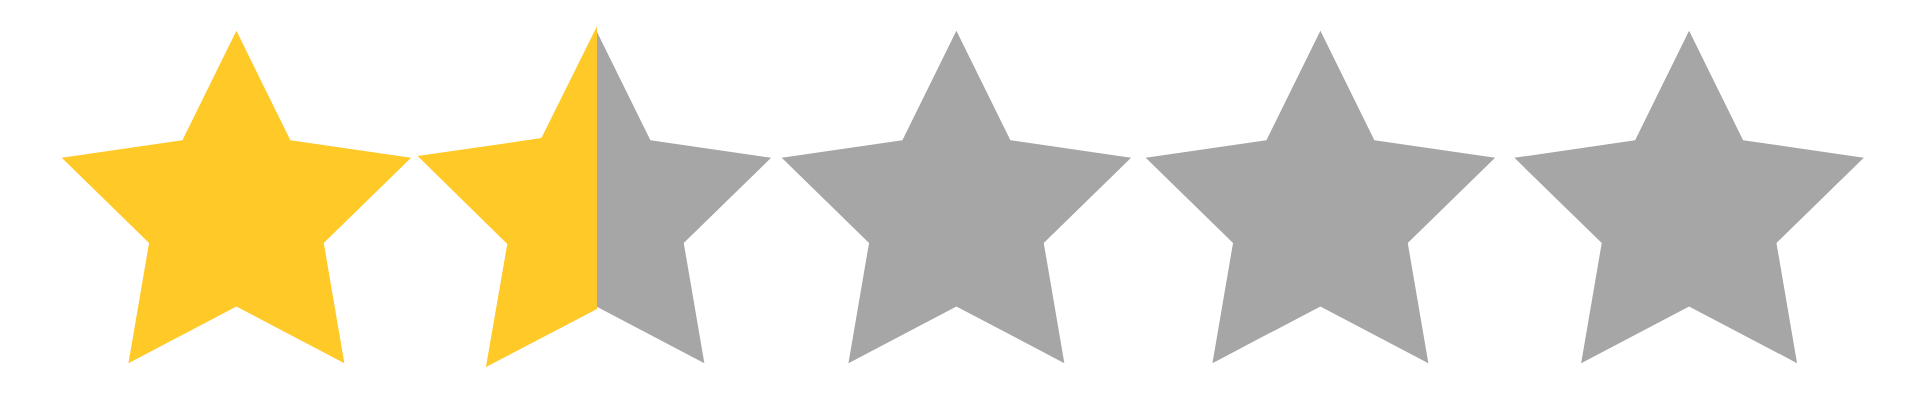 1.5 Stars